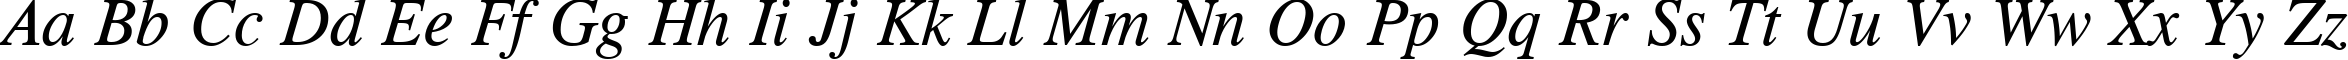 Пример написания английского алфавита шрифтом CG Times Italic